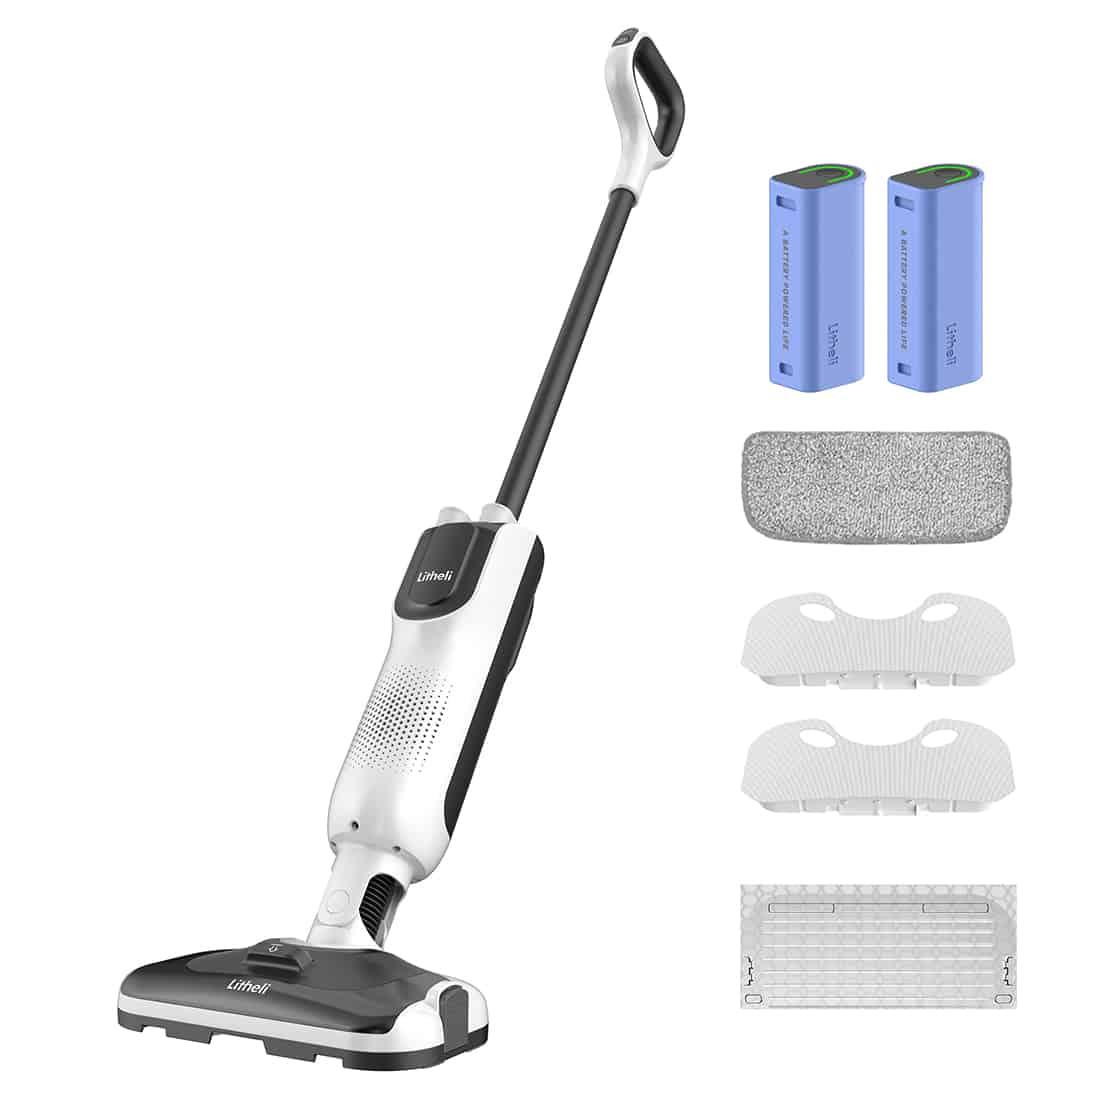 Litheli U4 Cordless Wet Dry Vacuum Cleaner